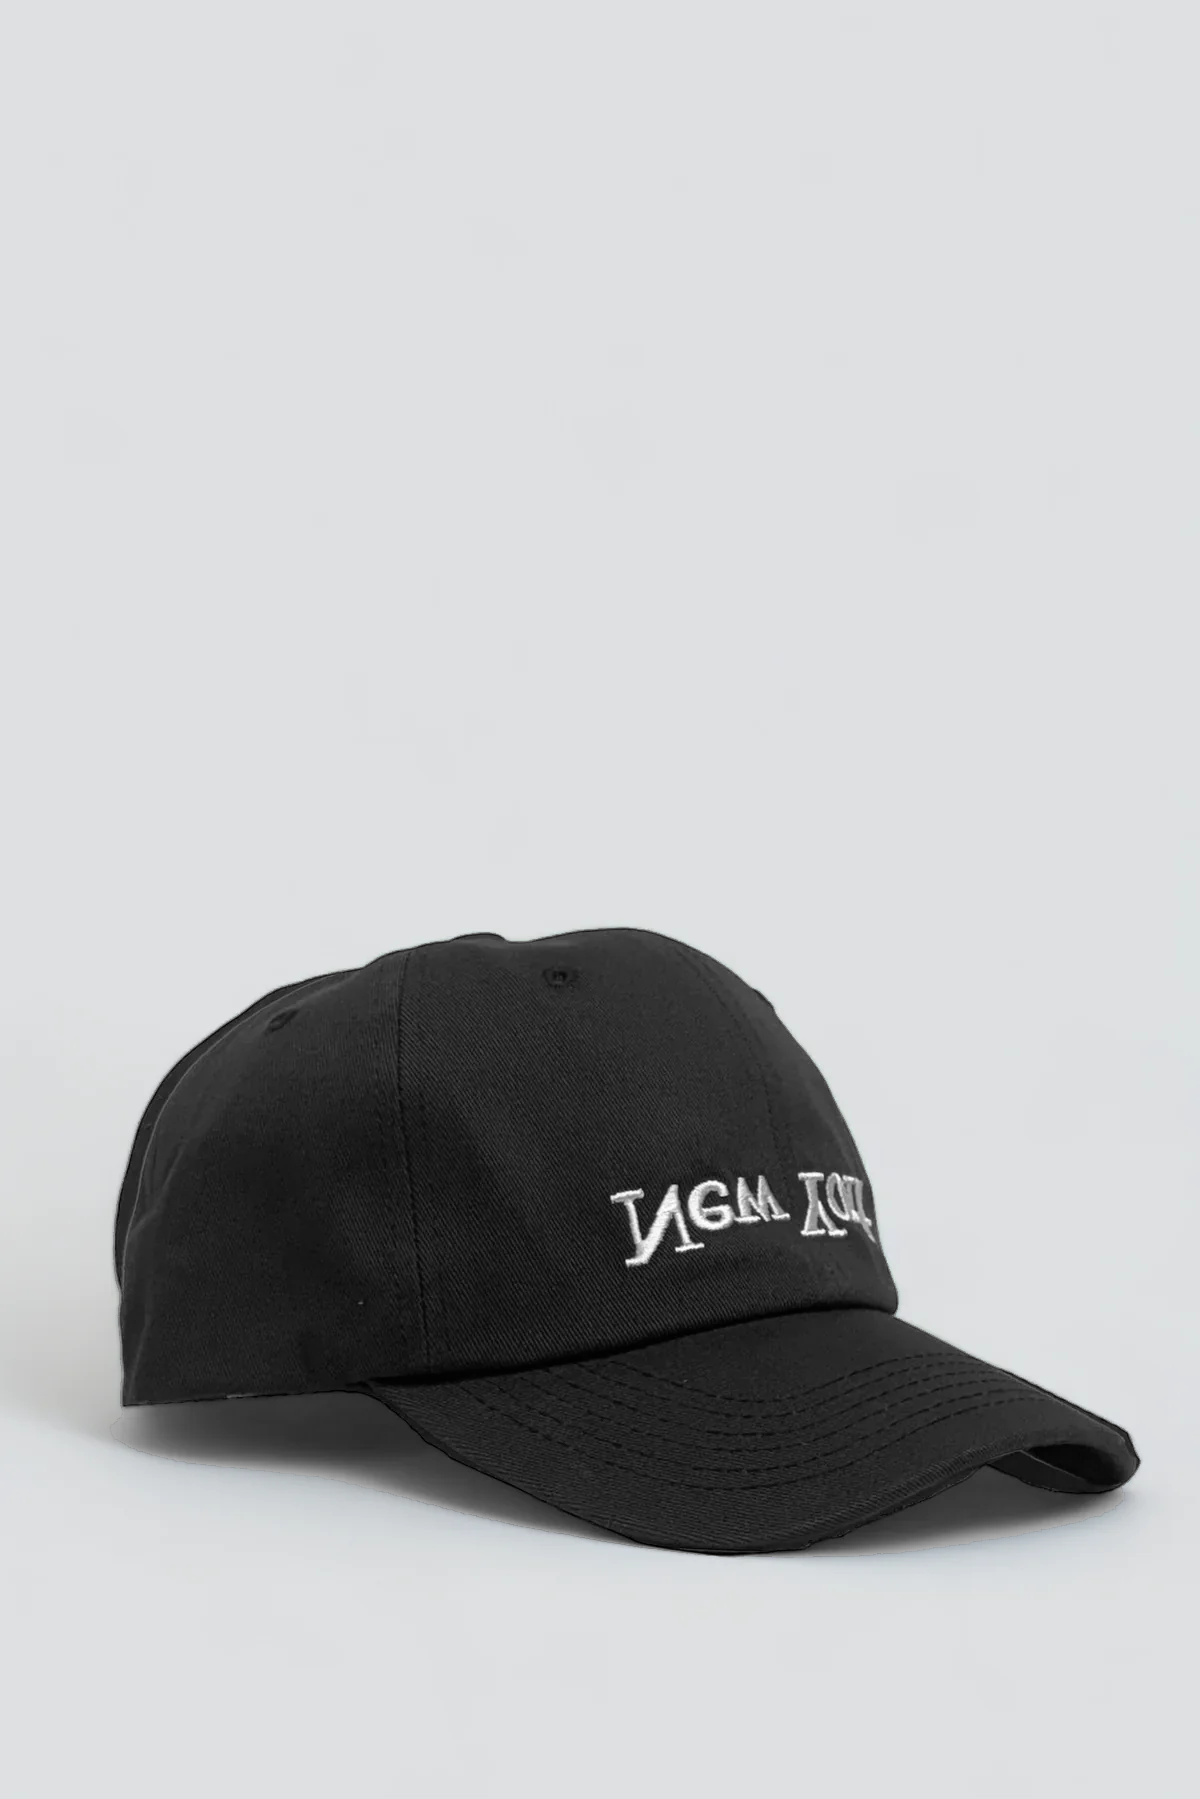 New York Embroidered Hat - Black/White